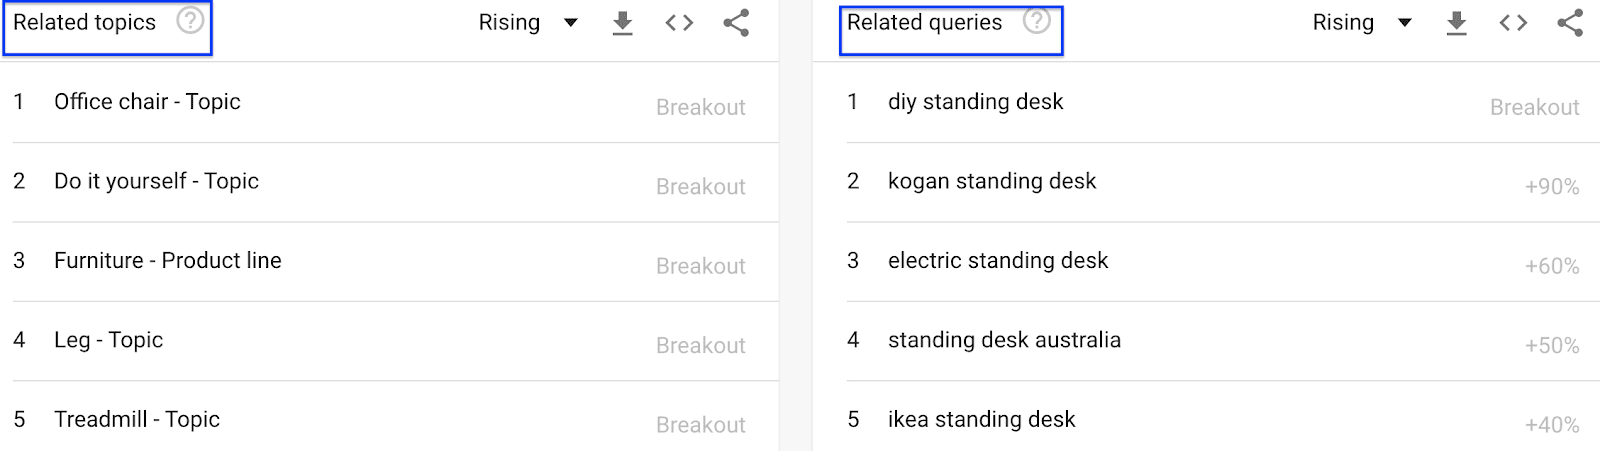 keywords google trends